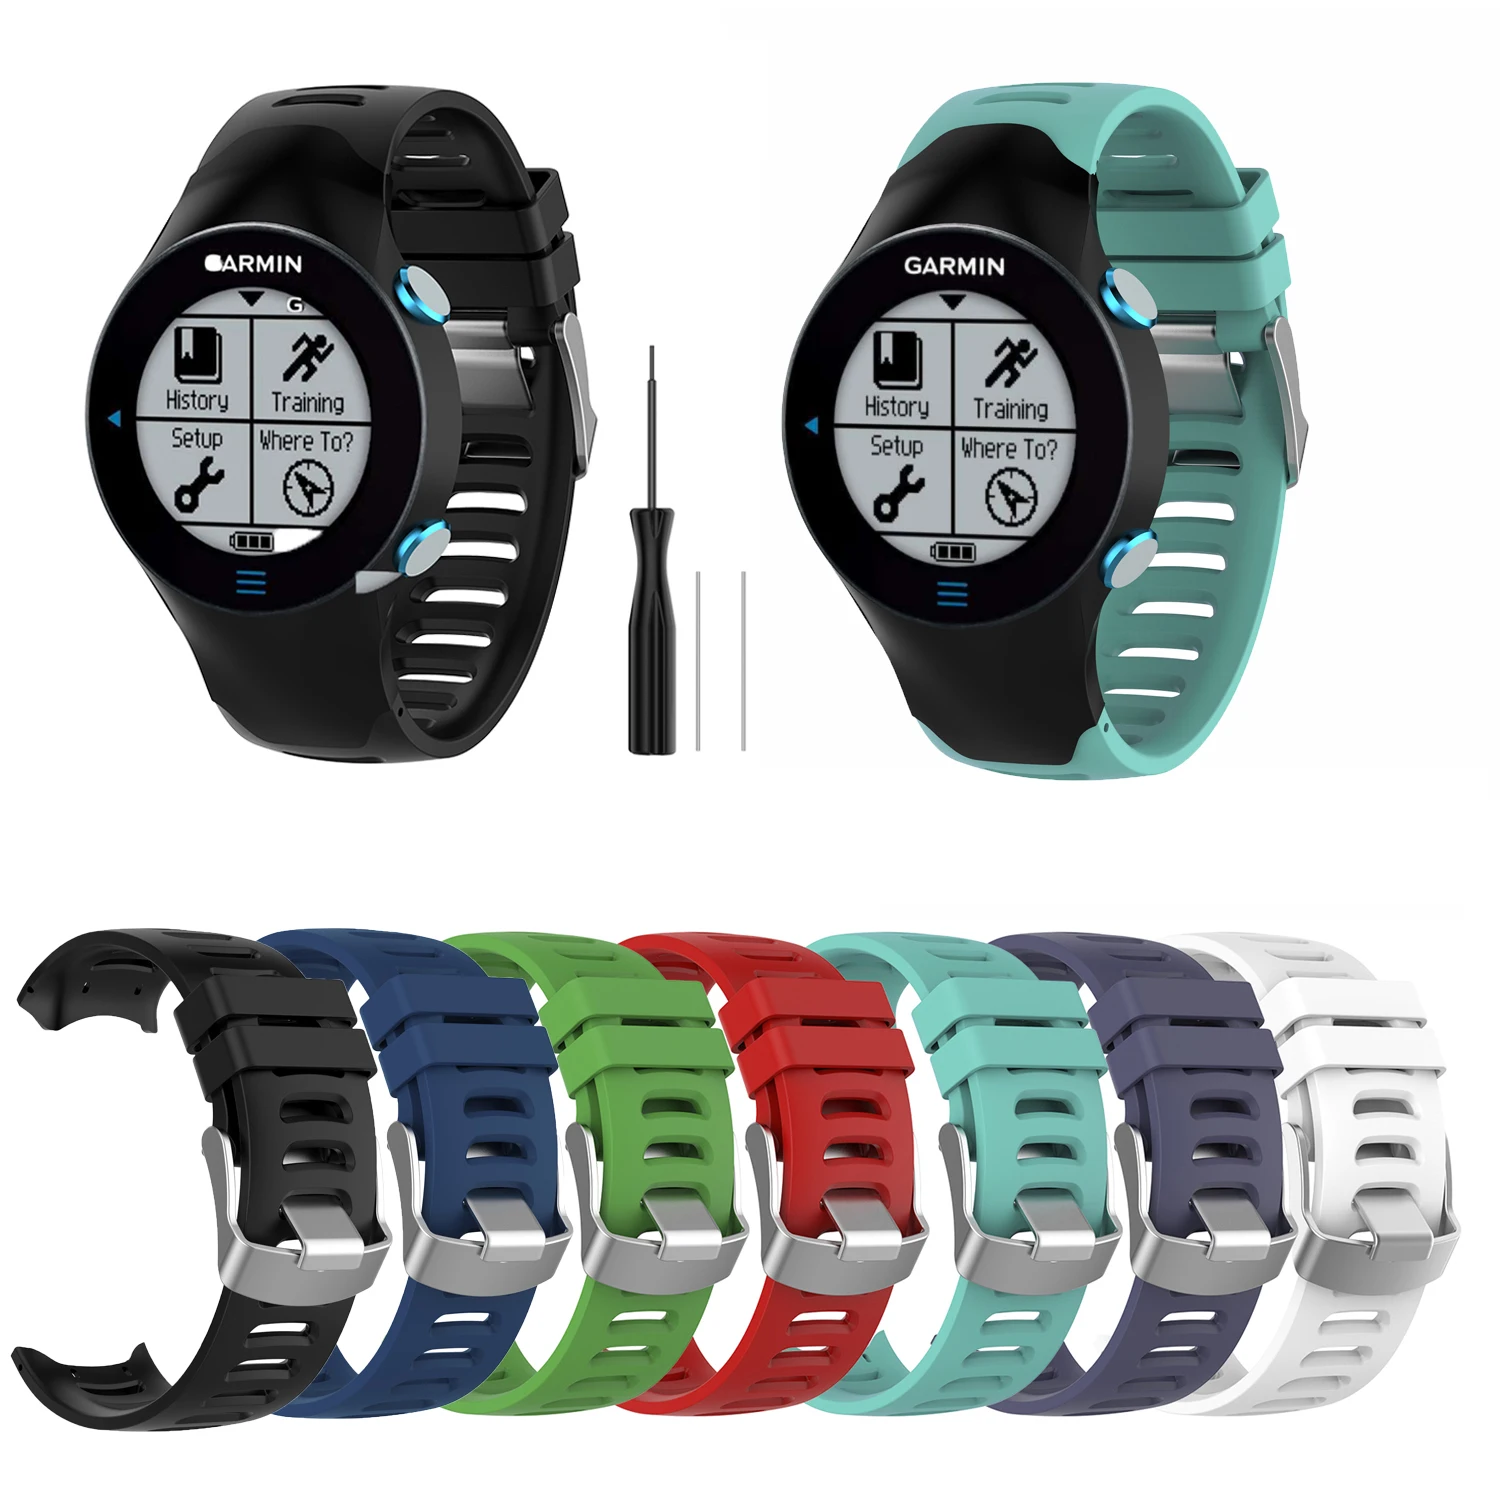 

Replacement Soft Silicone Wrist Strap For Garmin Forerunner 610 Smart Watch Band Bracelet for Forerunner610 sport wristband belt